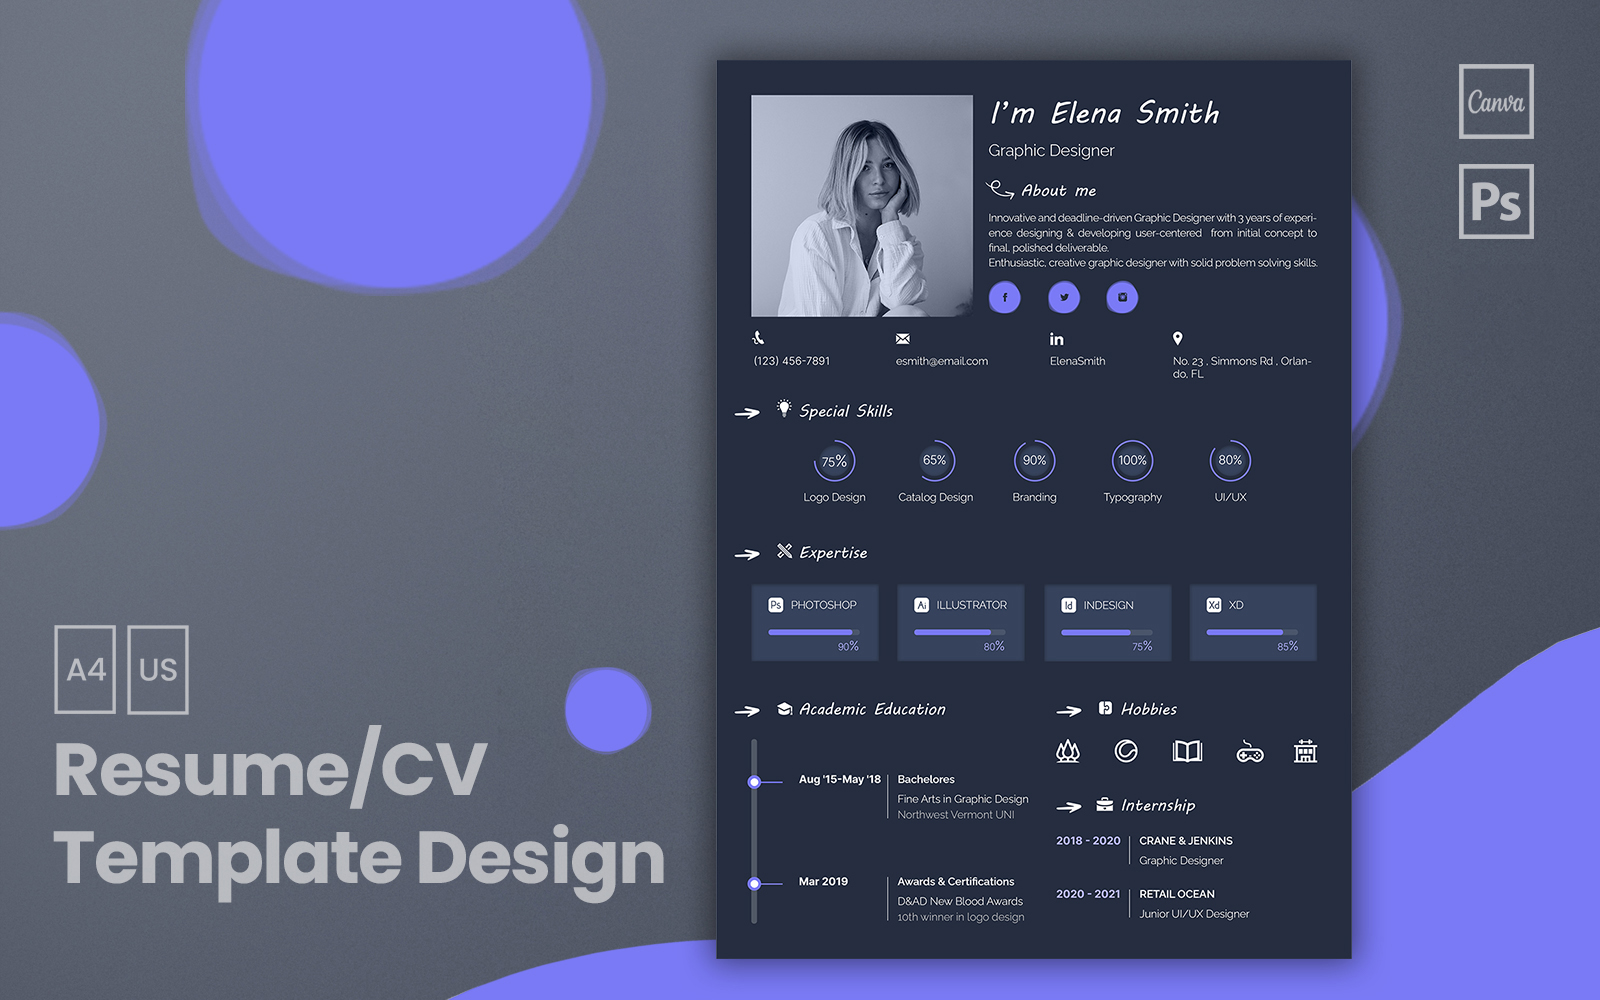 Resume/CV Template Design